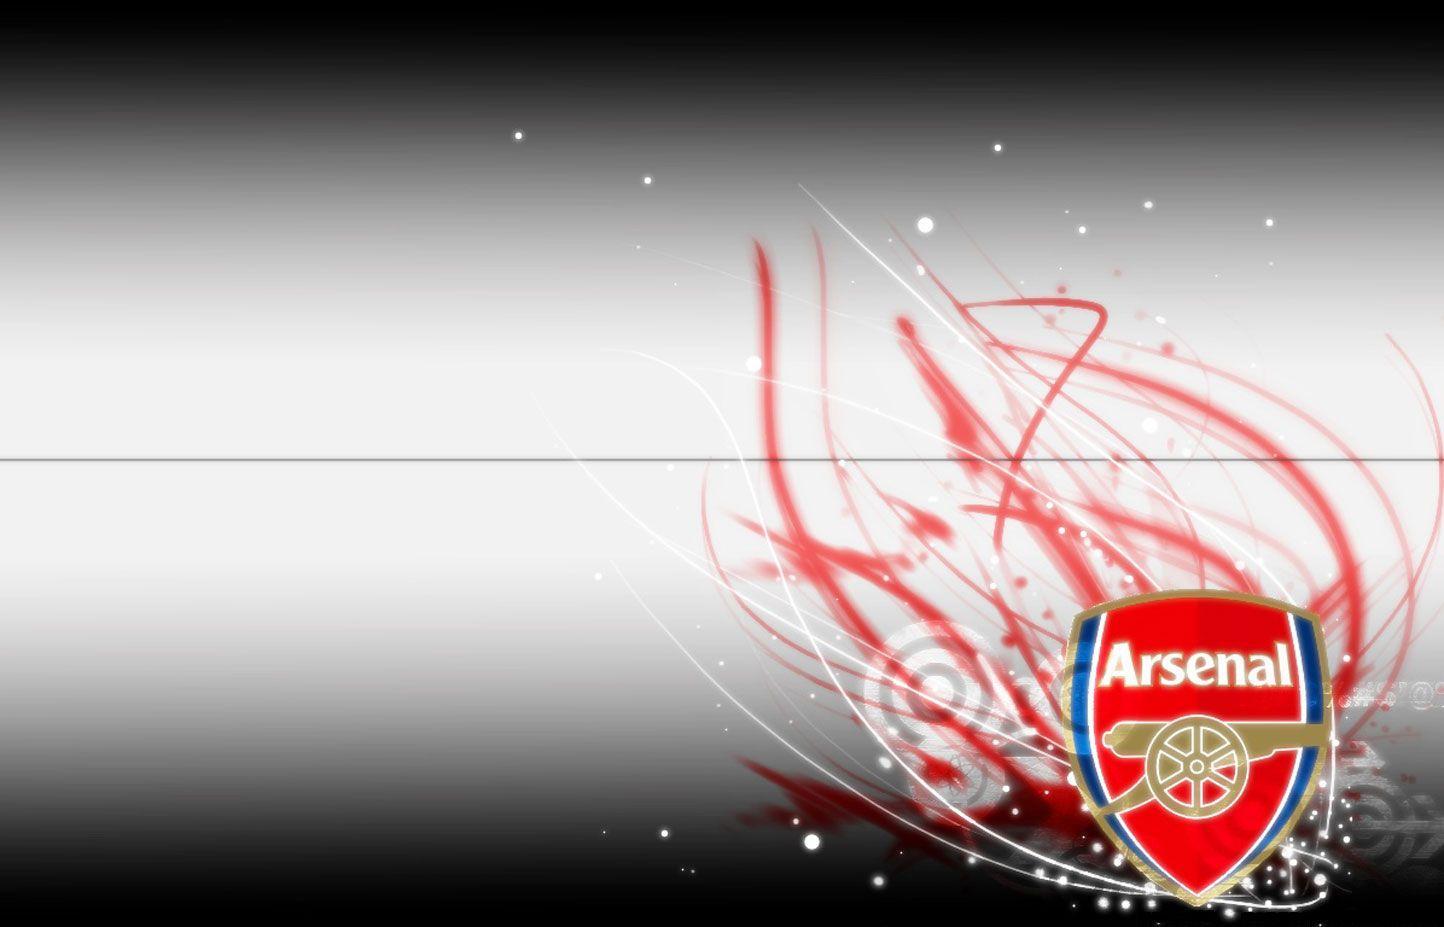 Arsenal FC Logo 2013 HD Wallpapers for Desktop